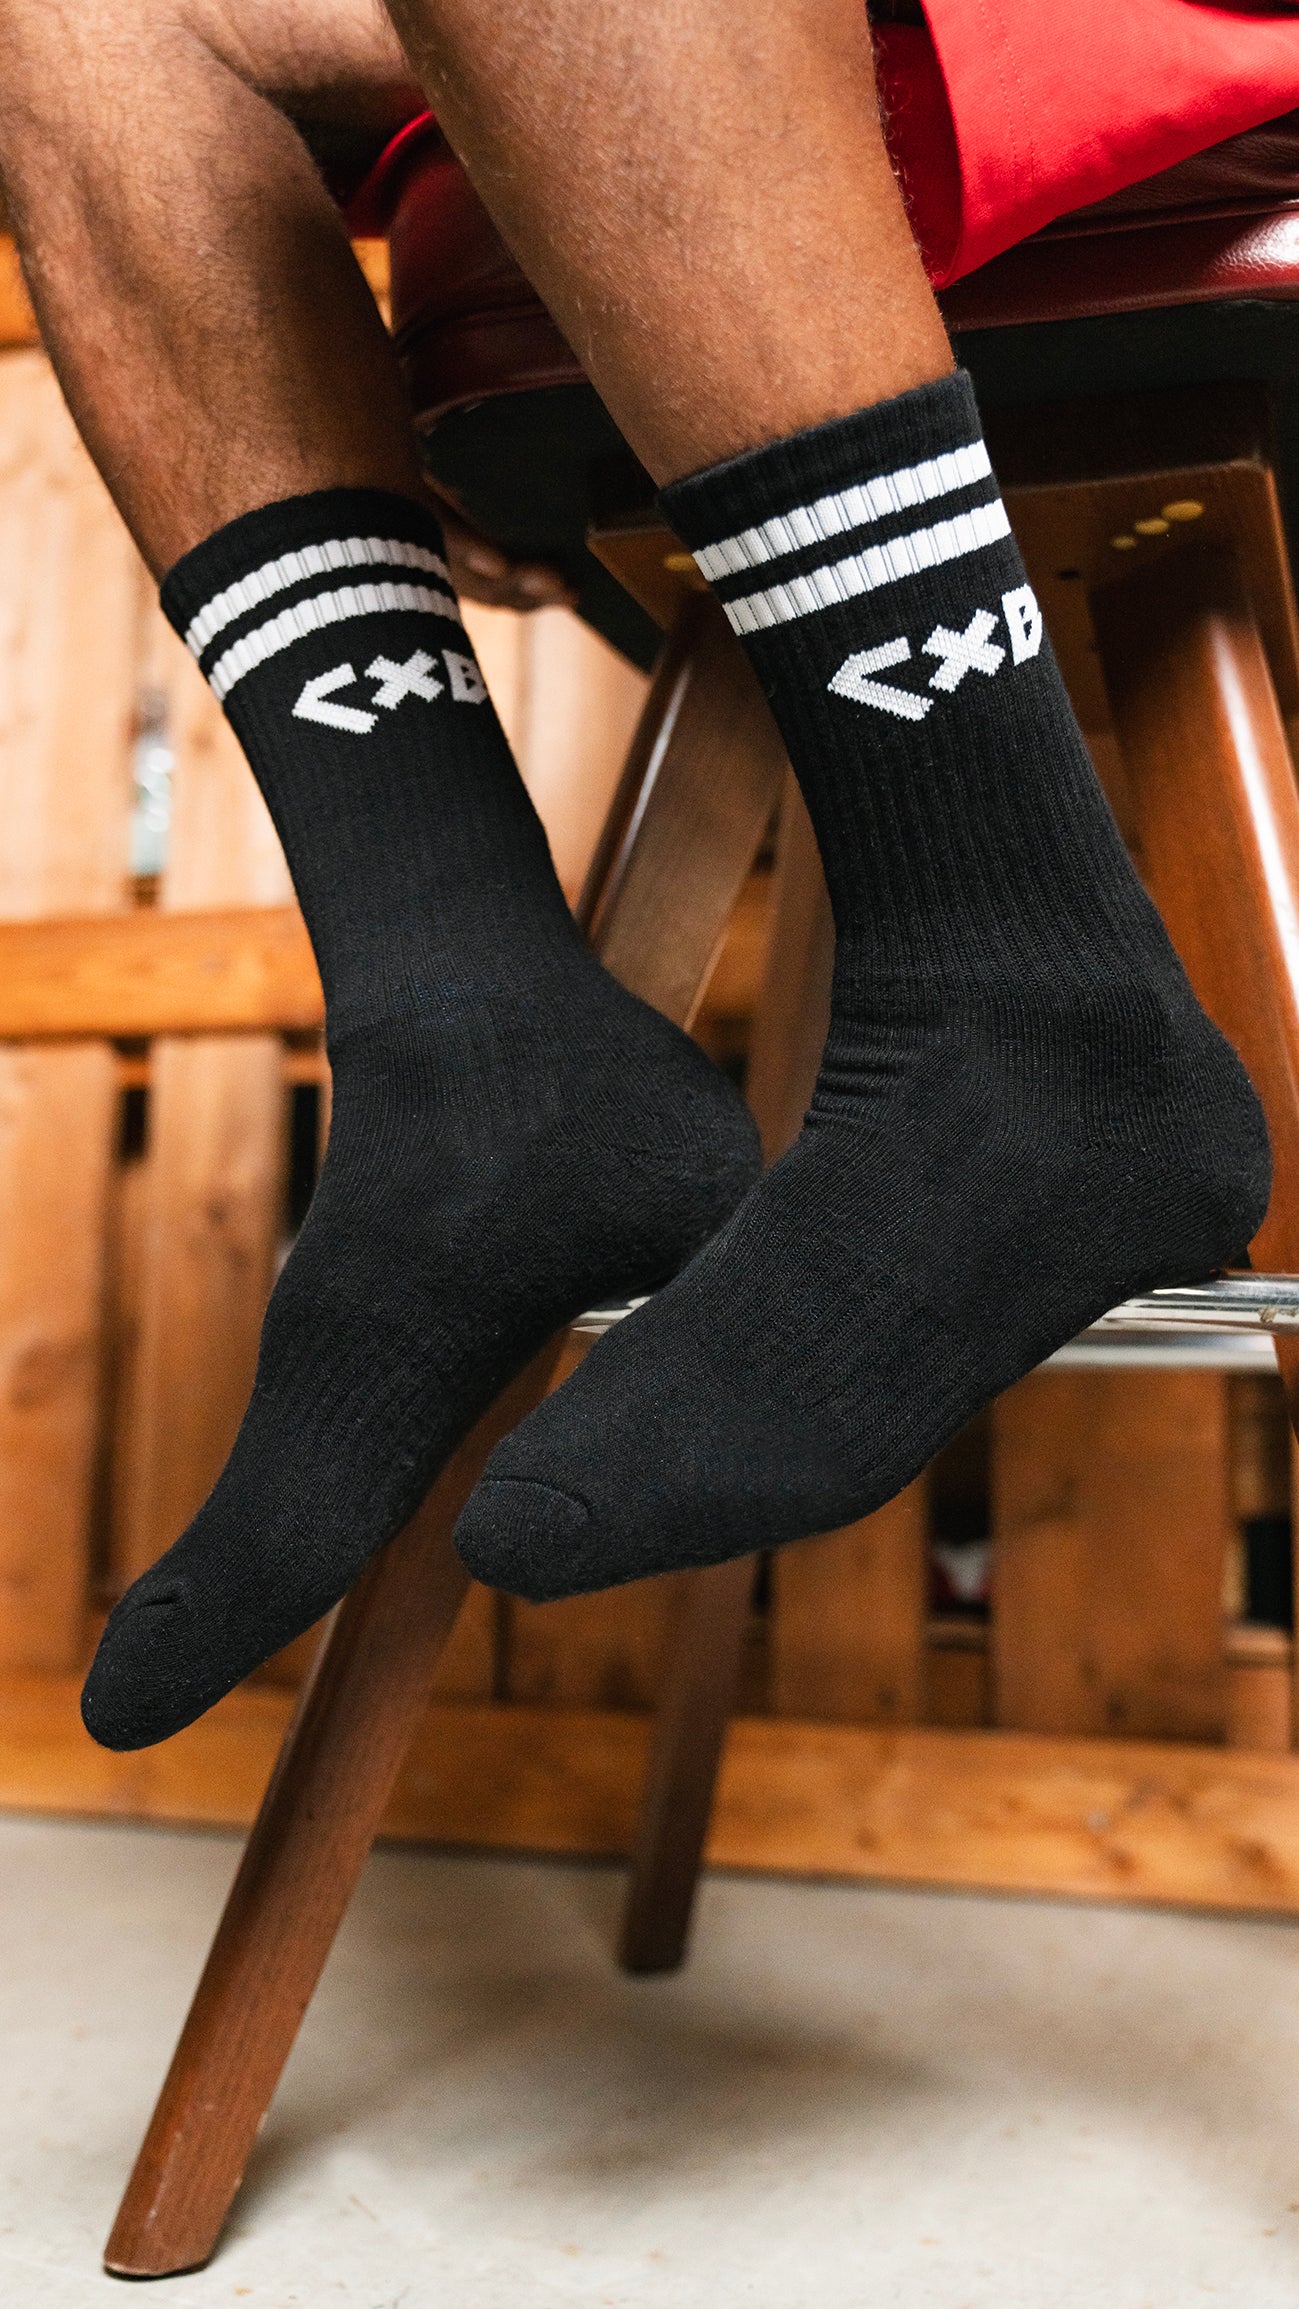 The men's socks - Black 2 pieces